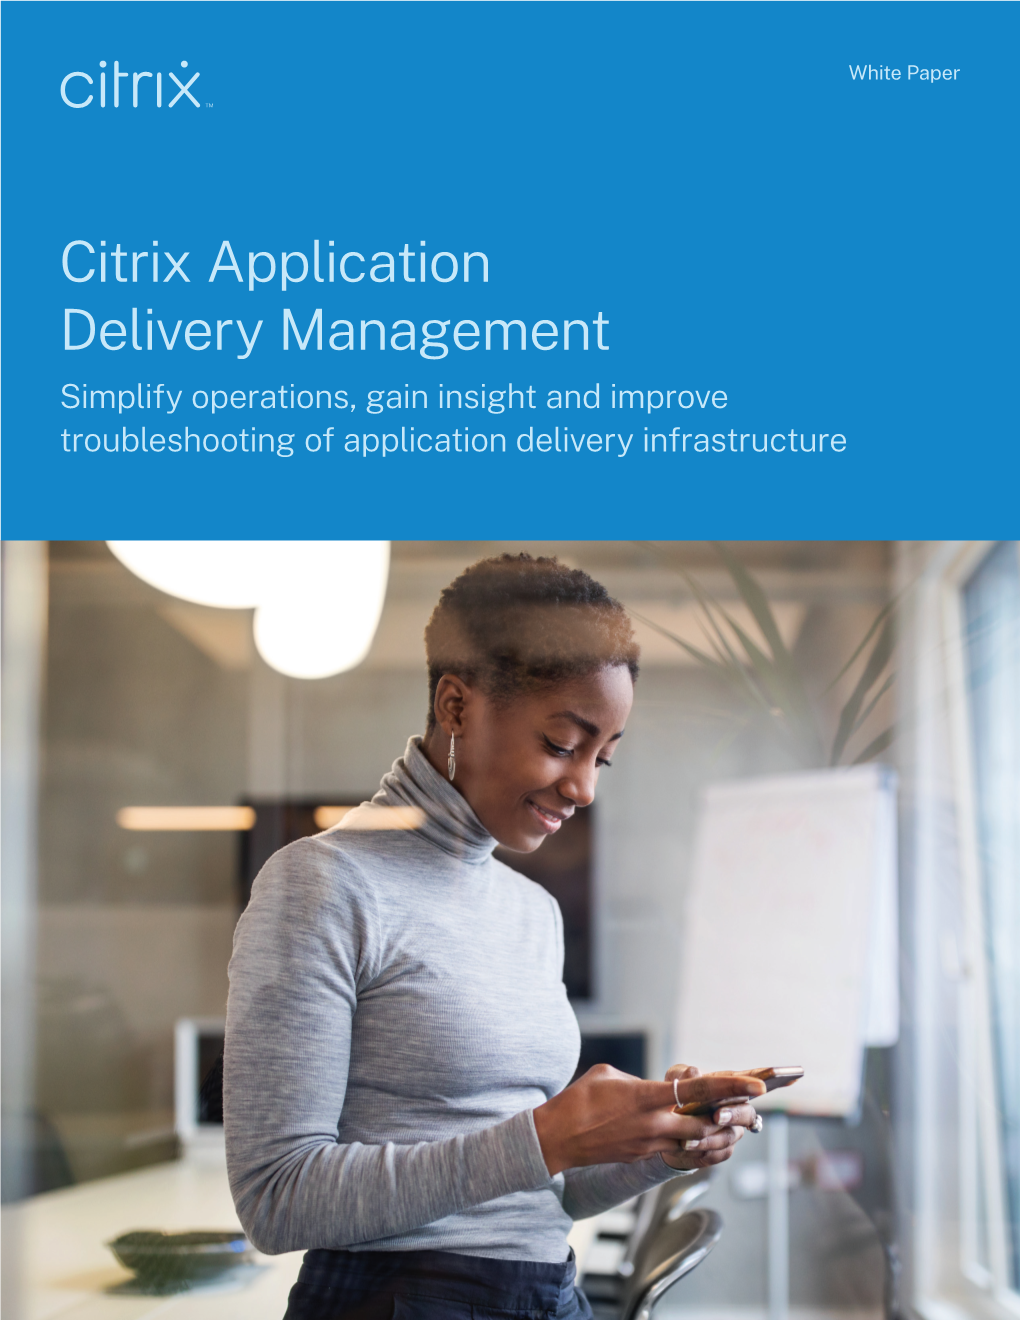 Citrix Application Delivery Management